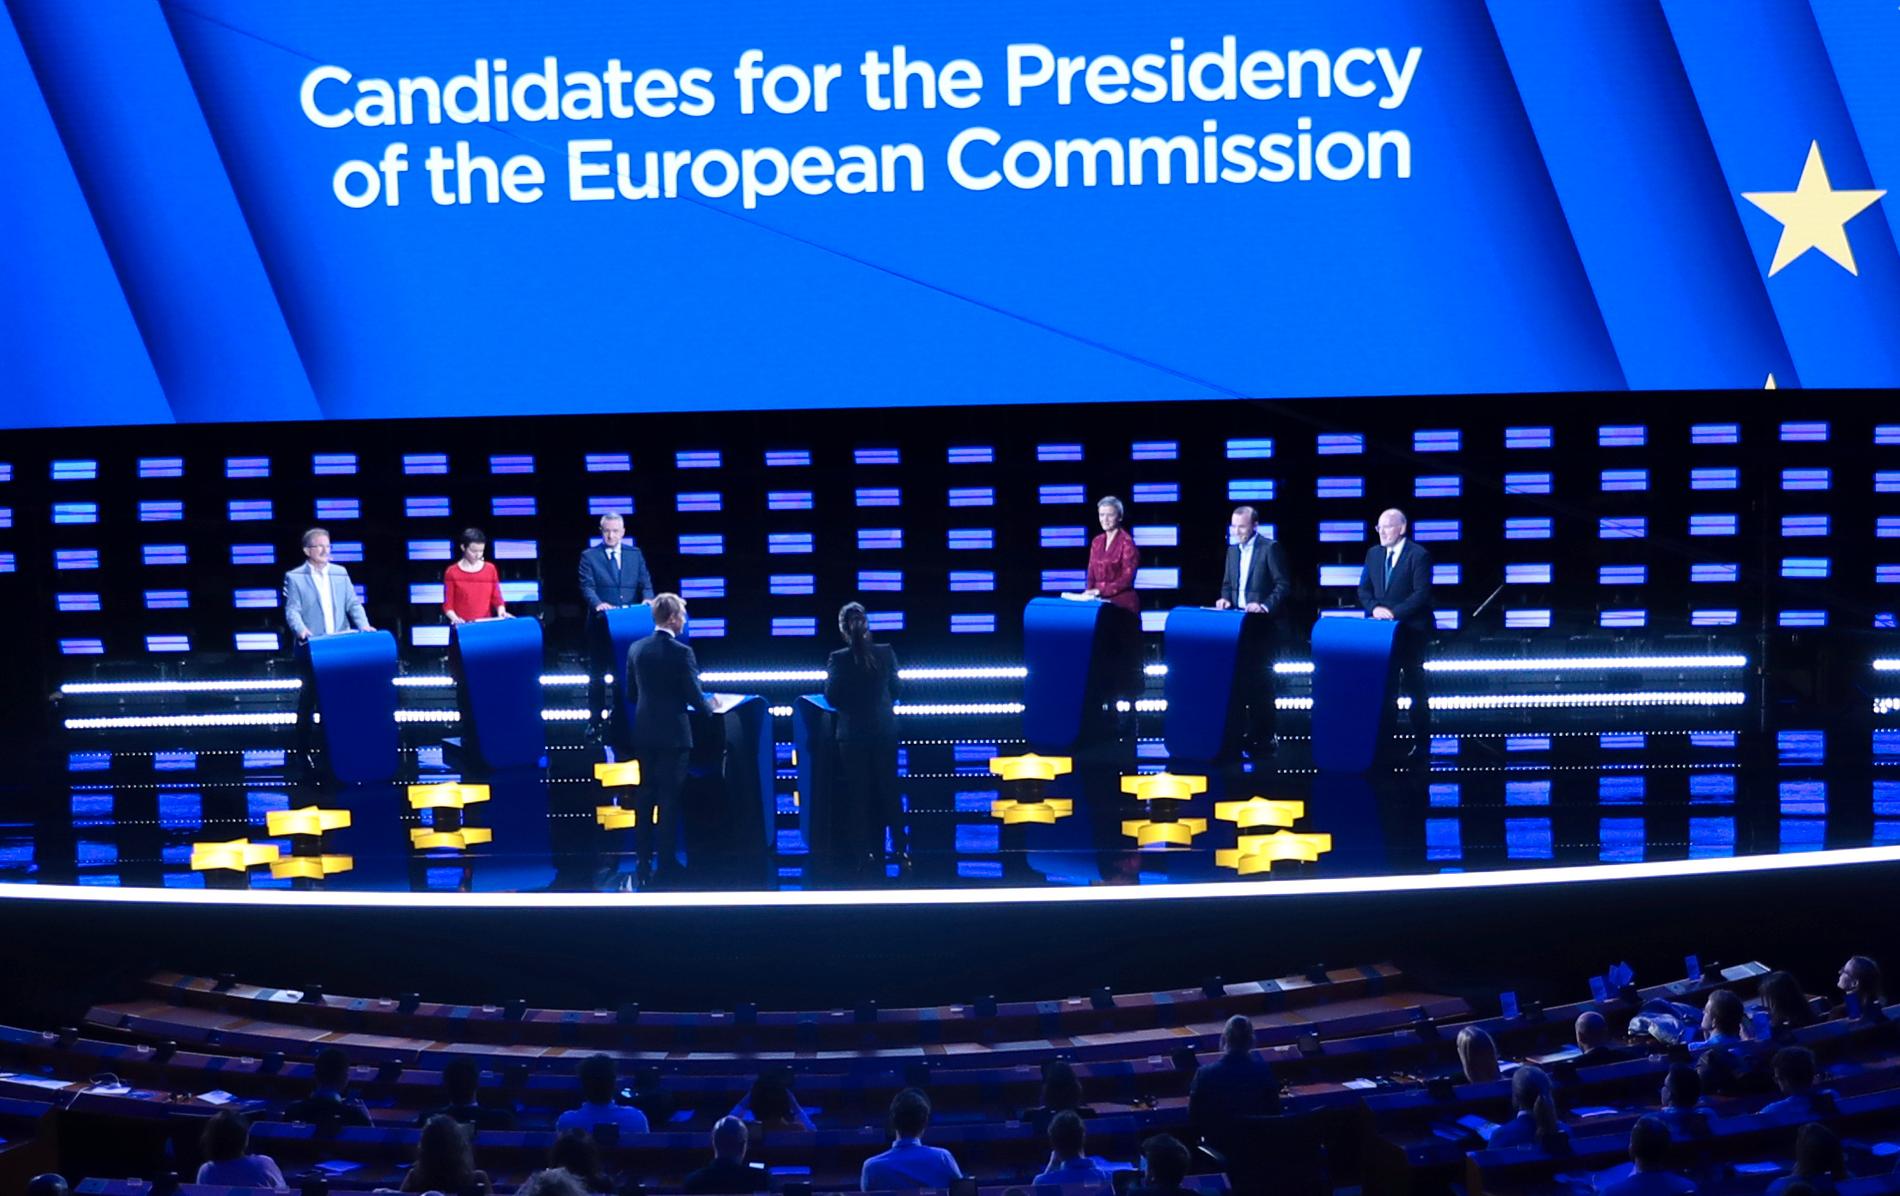 De sex ”spitzenkandidaten” möttes i debatten i Bryssel.